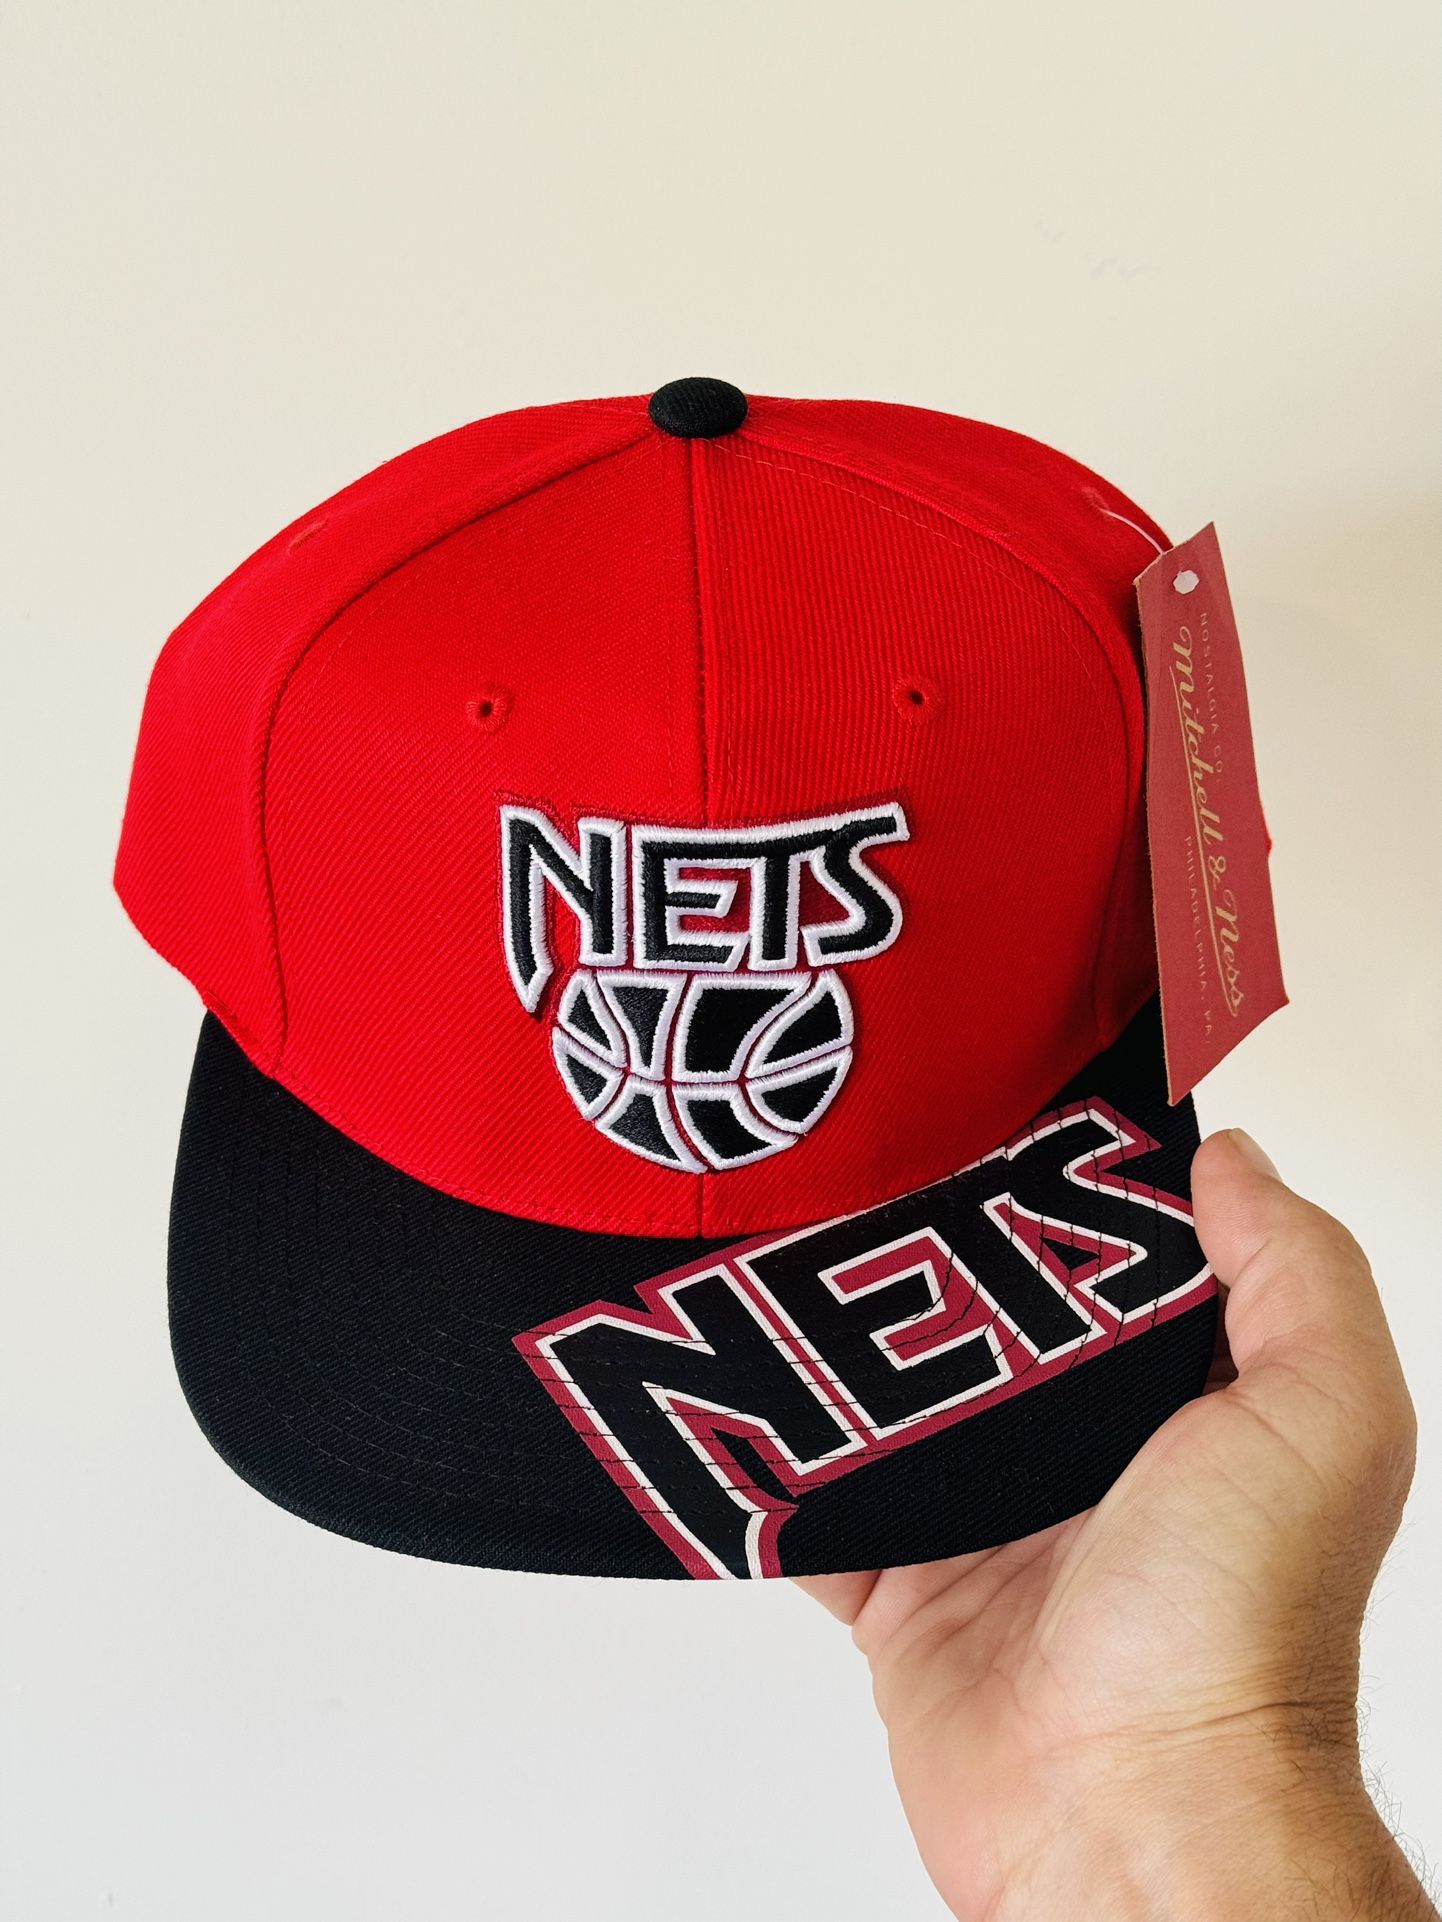 New Jersey Nets SnapBack Hat